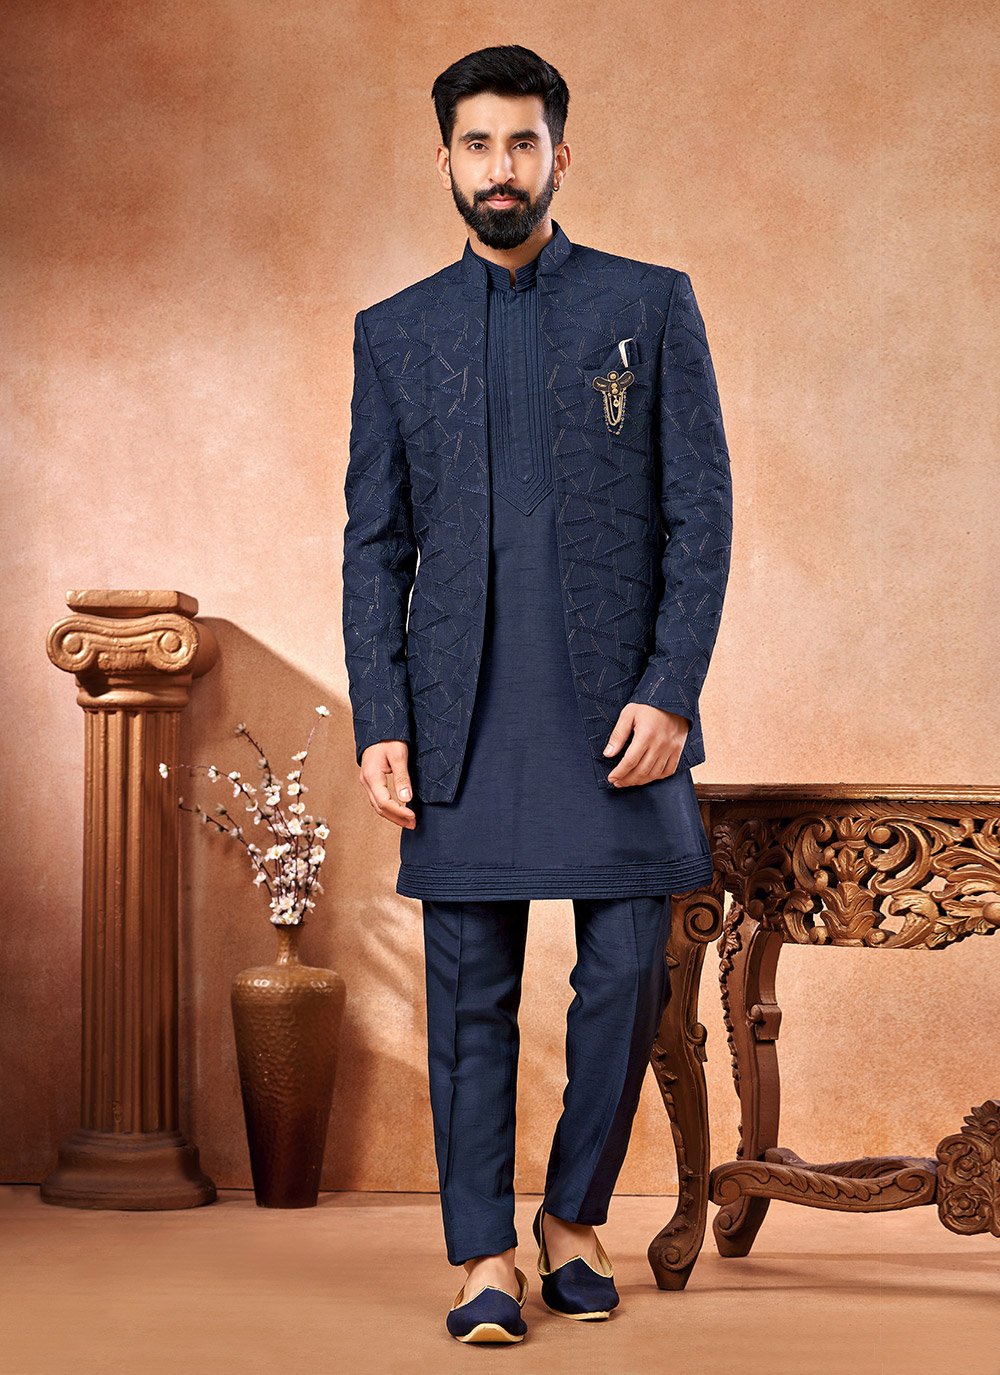 INMONARCH Mens Navy Blue Embroidered Jodhpuri Suit JO484R34 34 Regular Navy  Blue at Amazon Men's Clothing store